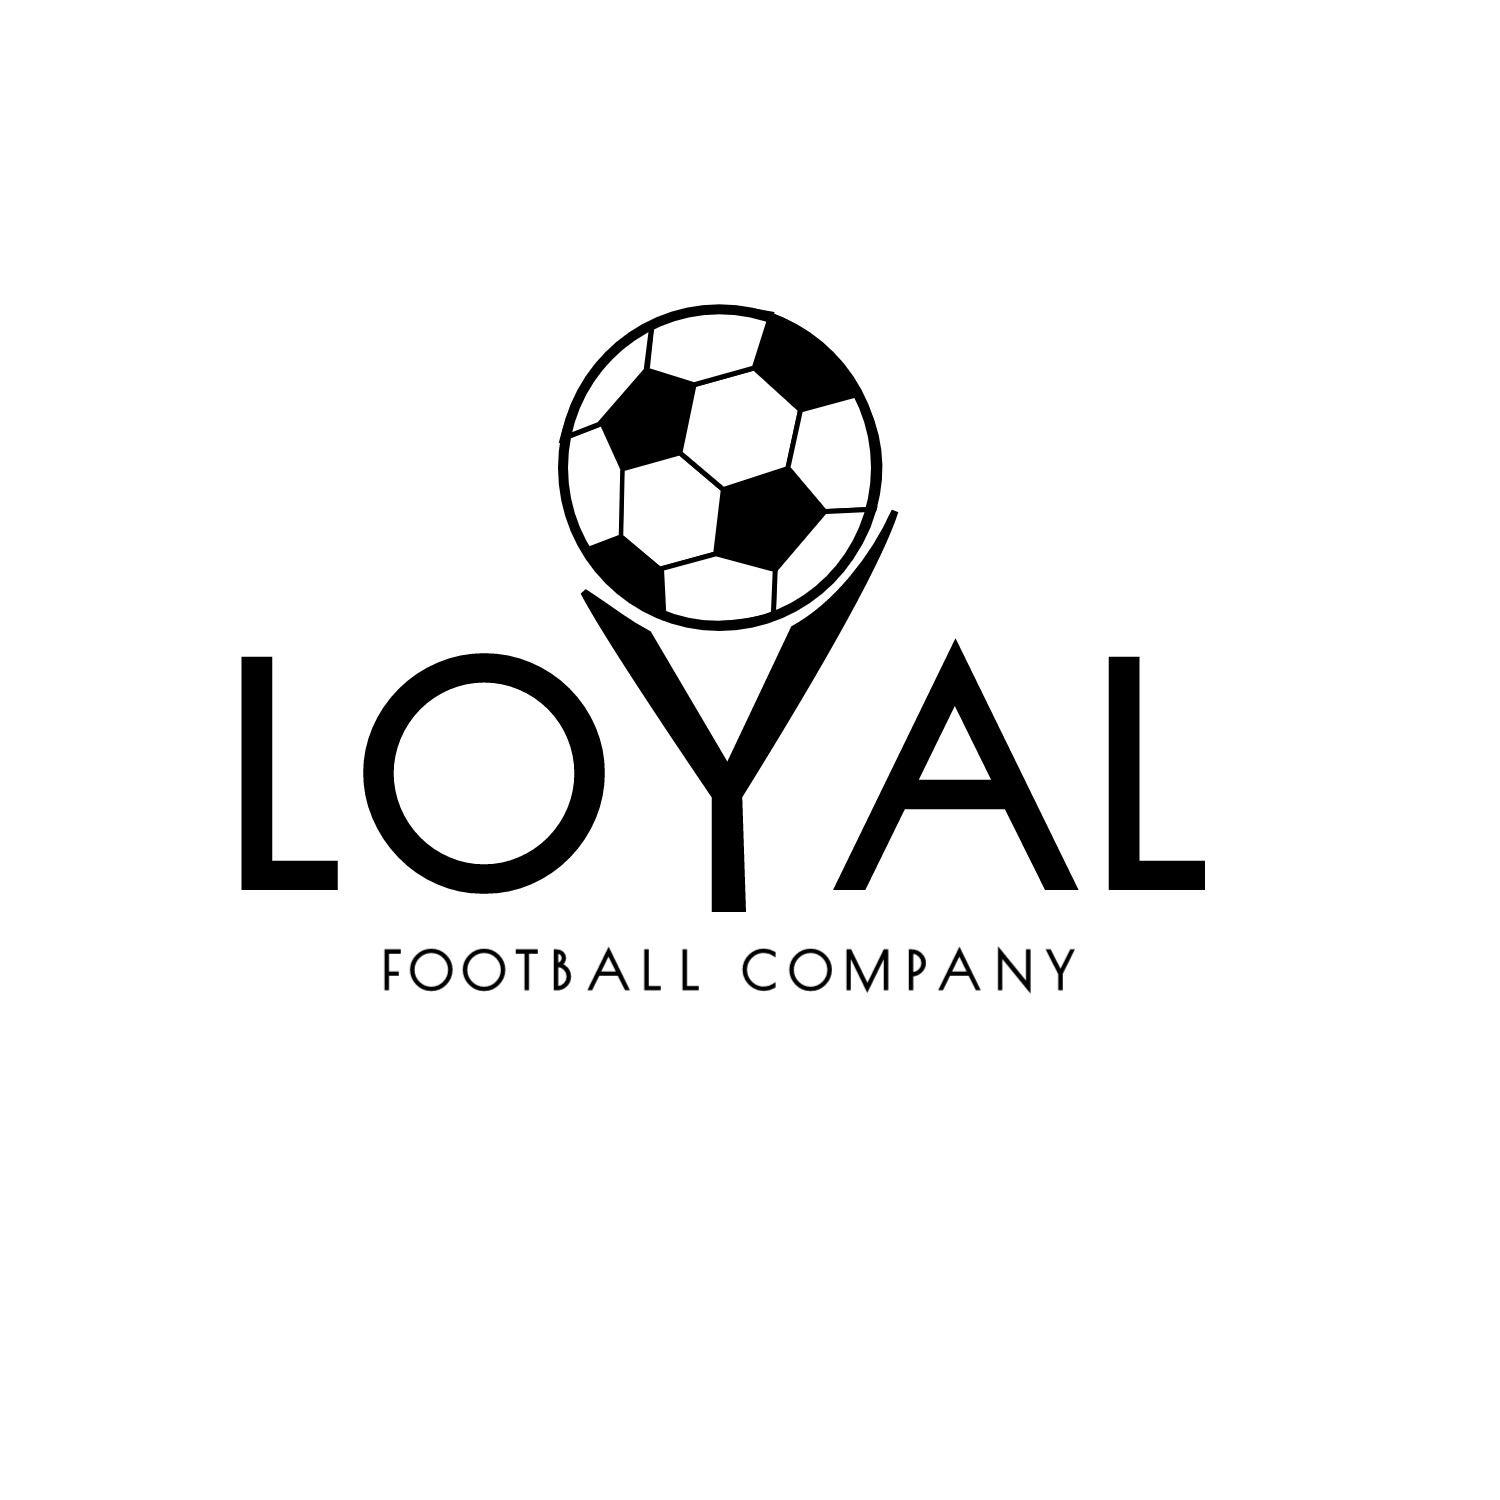 Loyal Logo - Traditional, Serious, Clothing Logo Design for Loyal Football